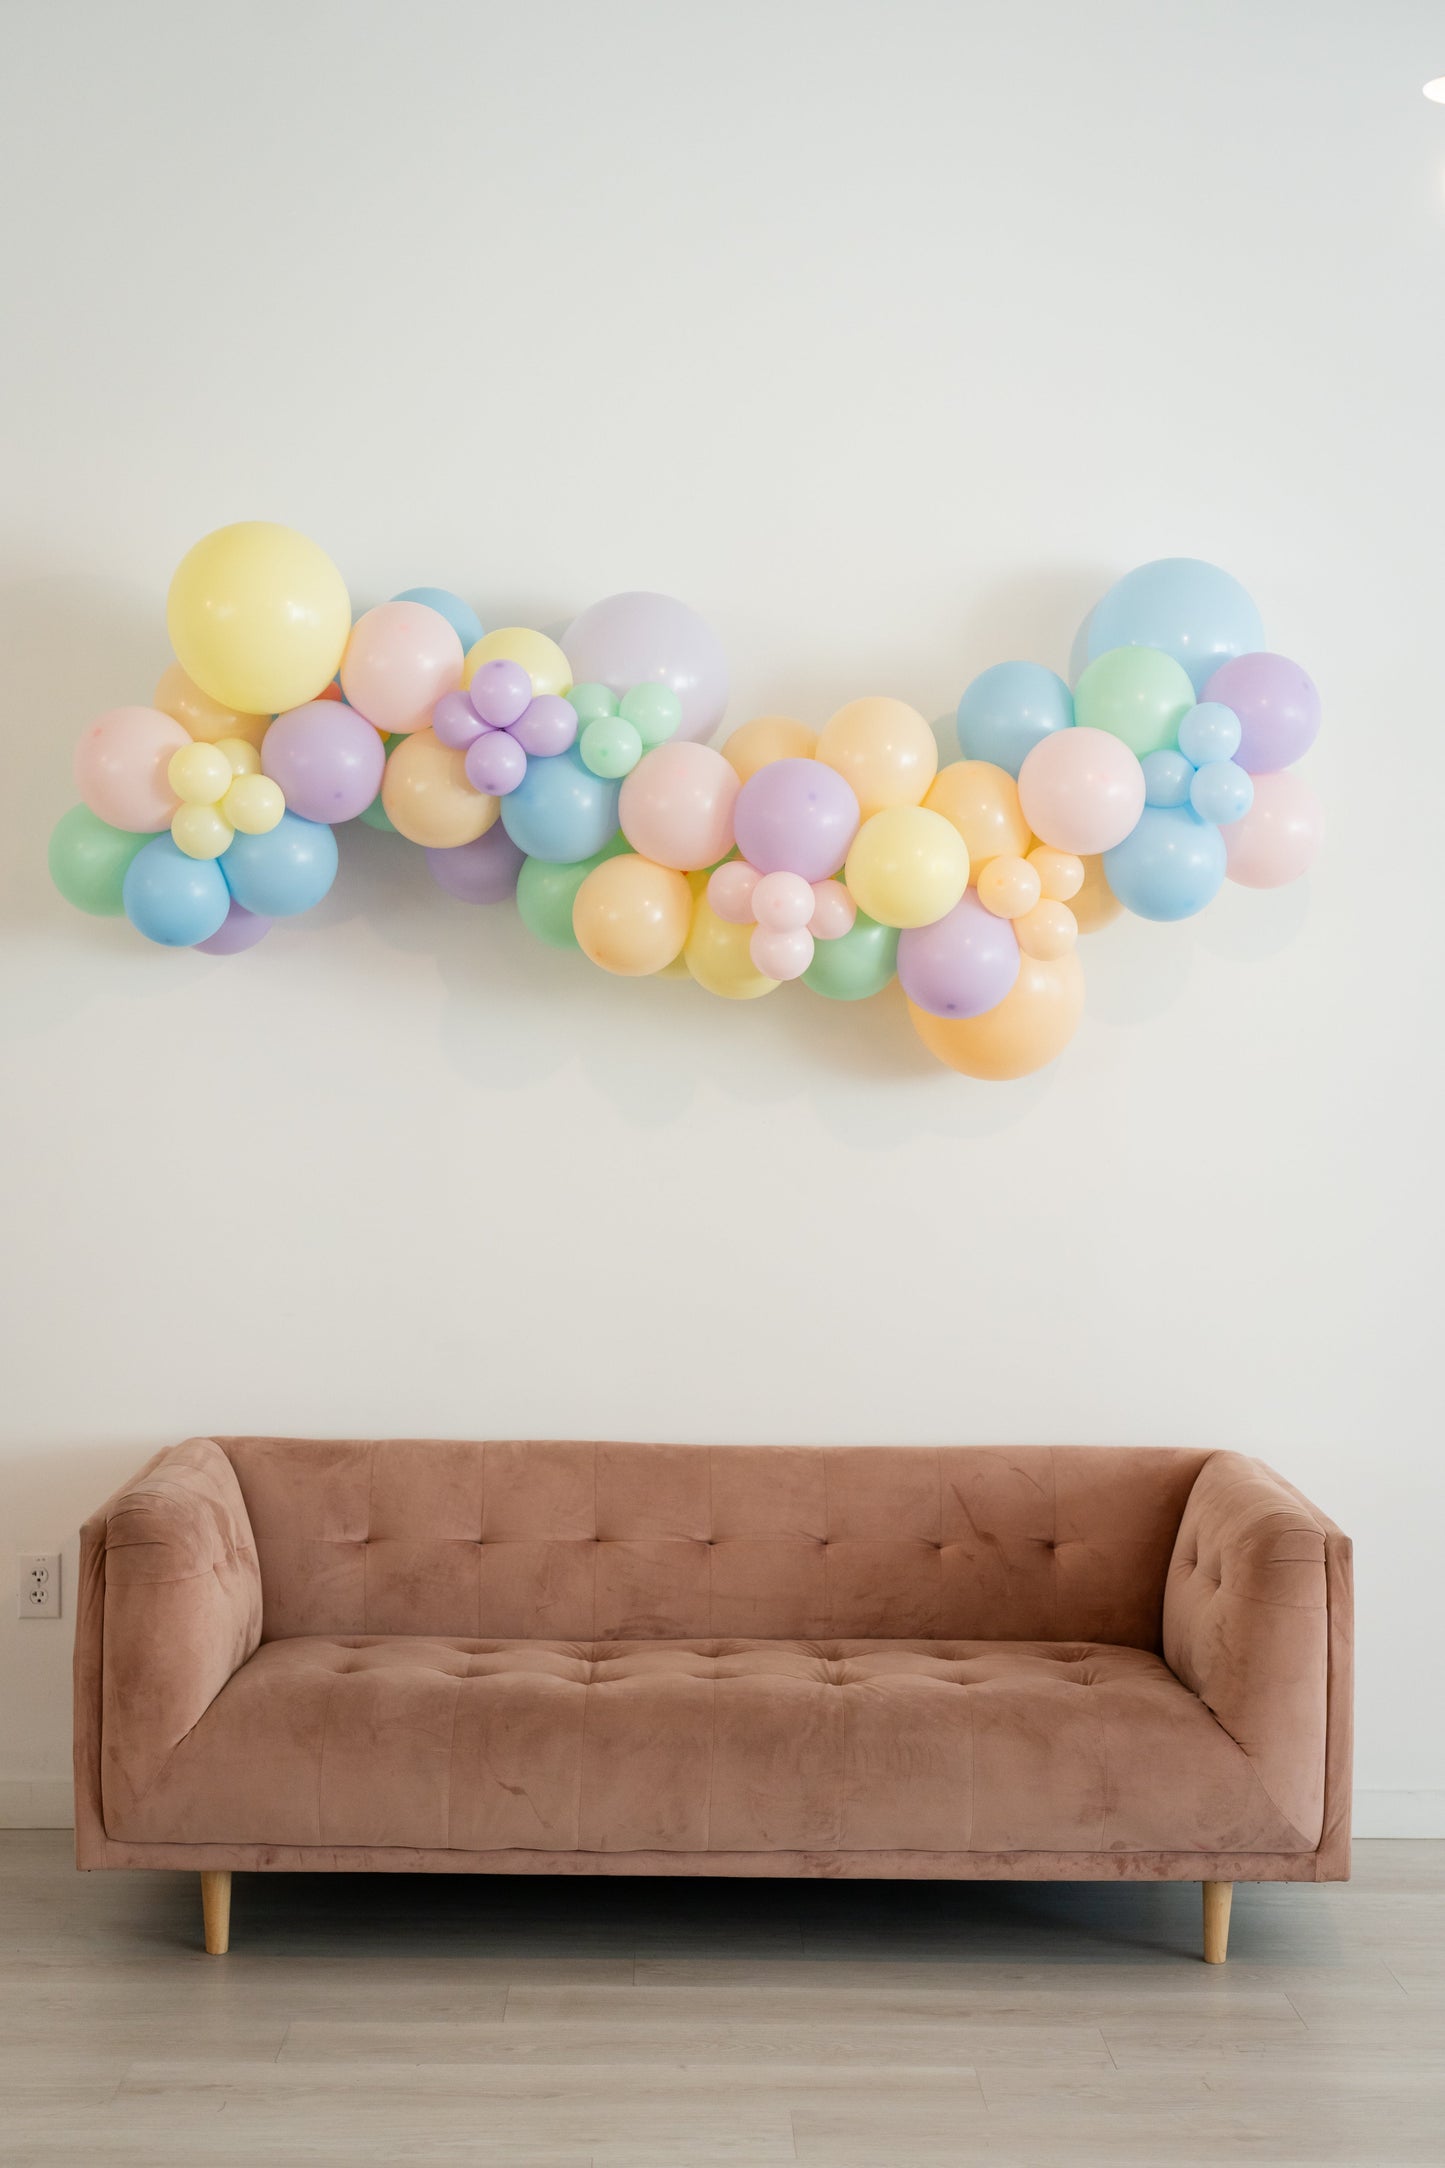 Create Your Own DIY Balloon Garland Kit